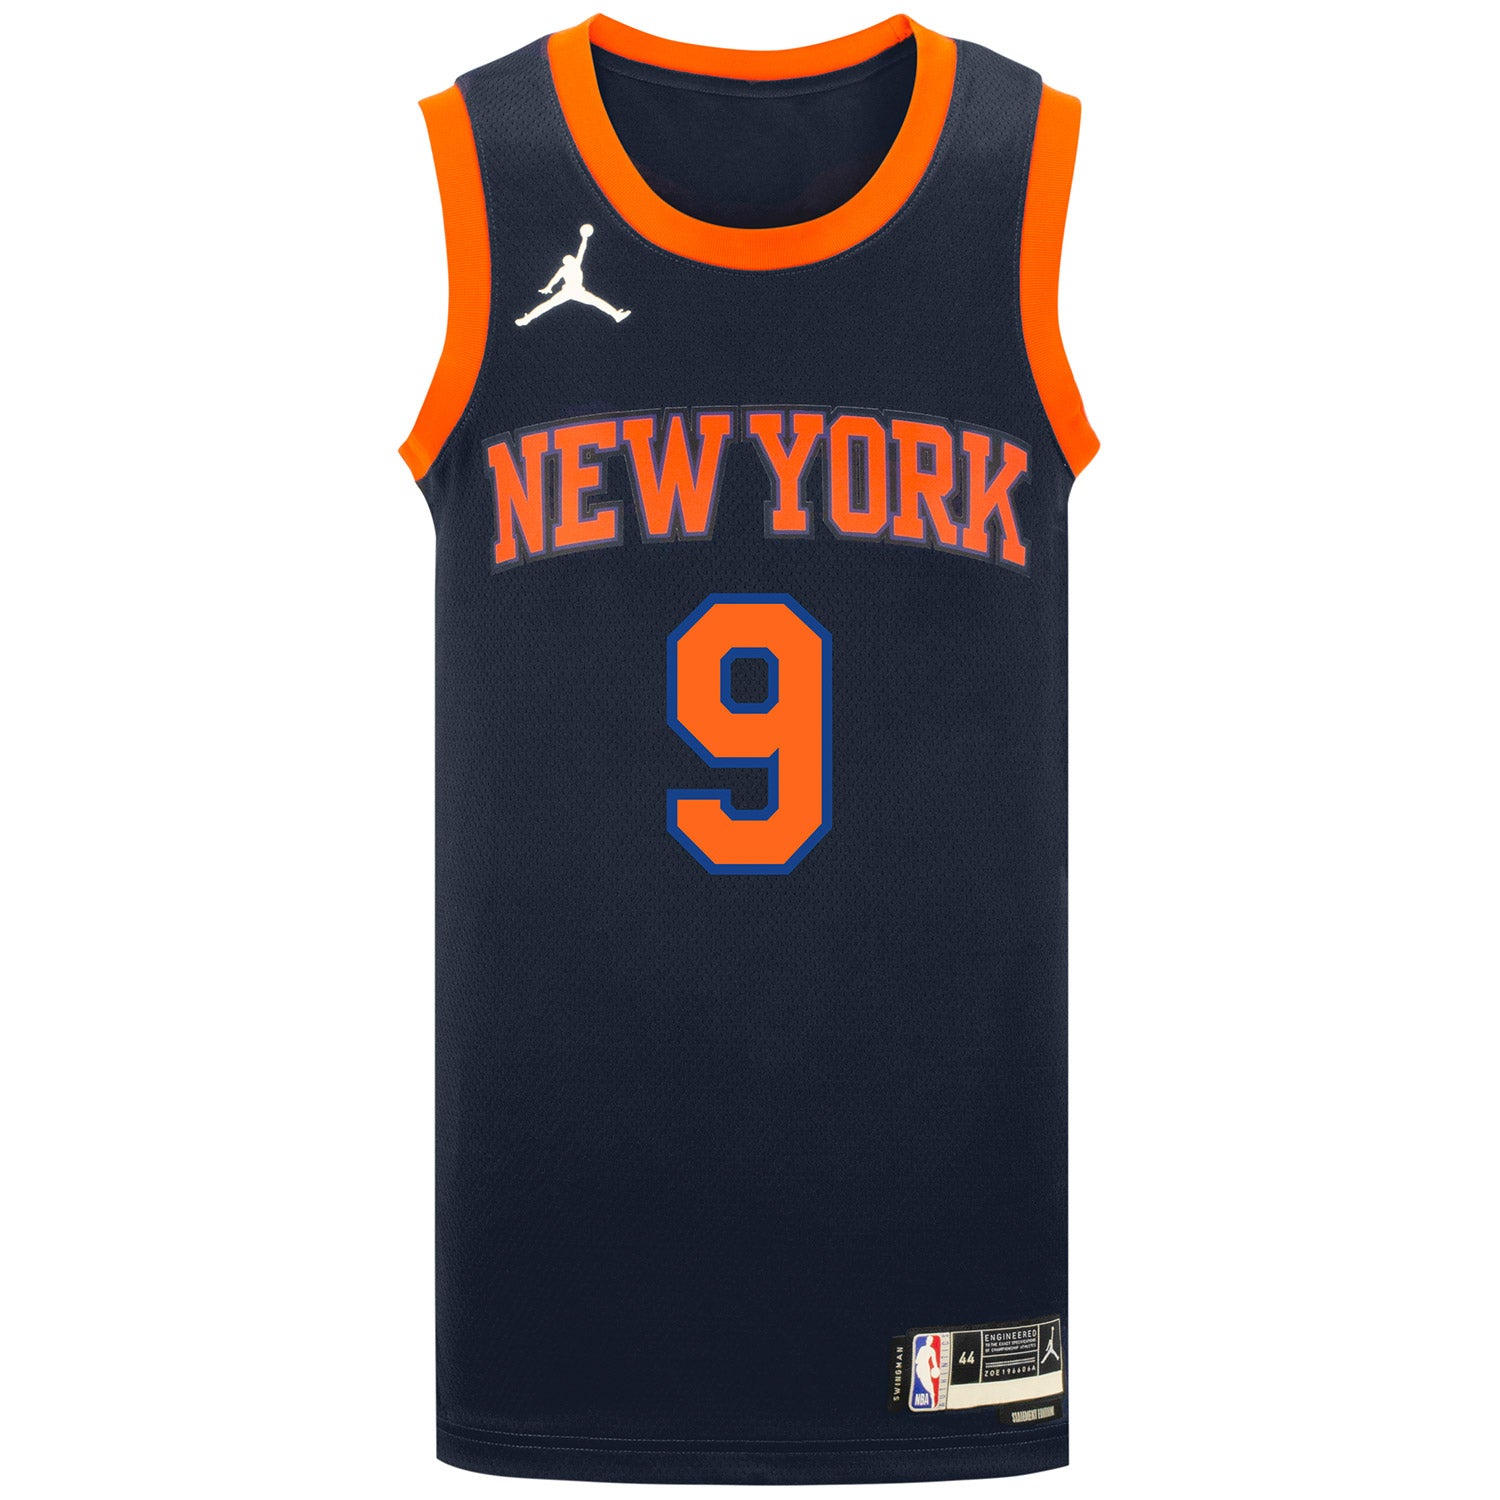 SHOP MSG: RJ Barrett New York Knicks Authentic Jersey 